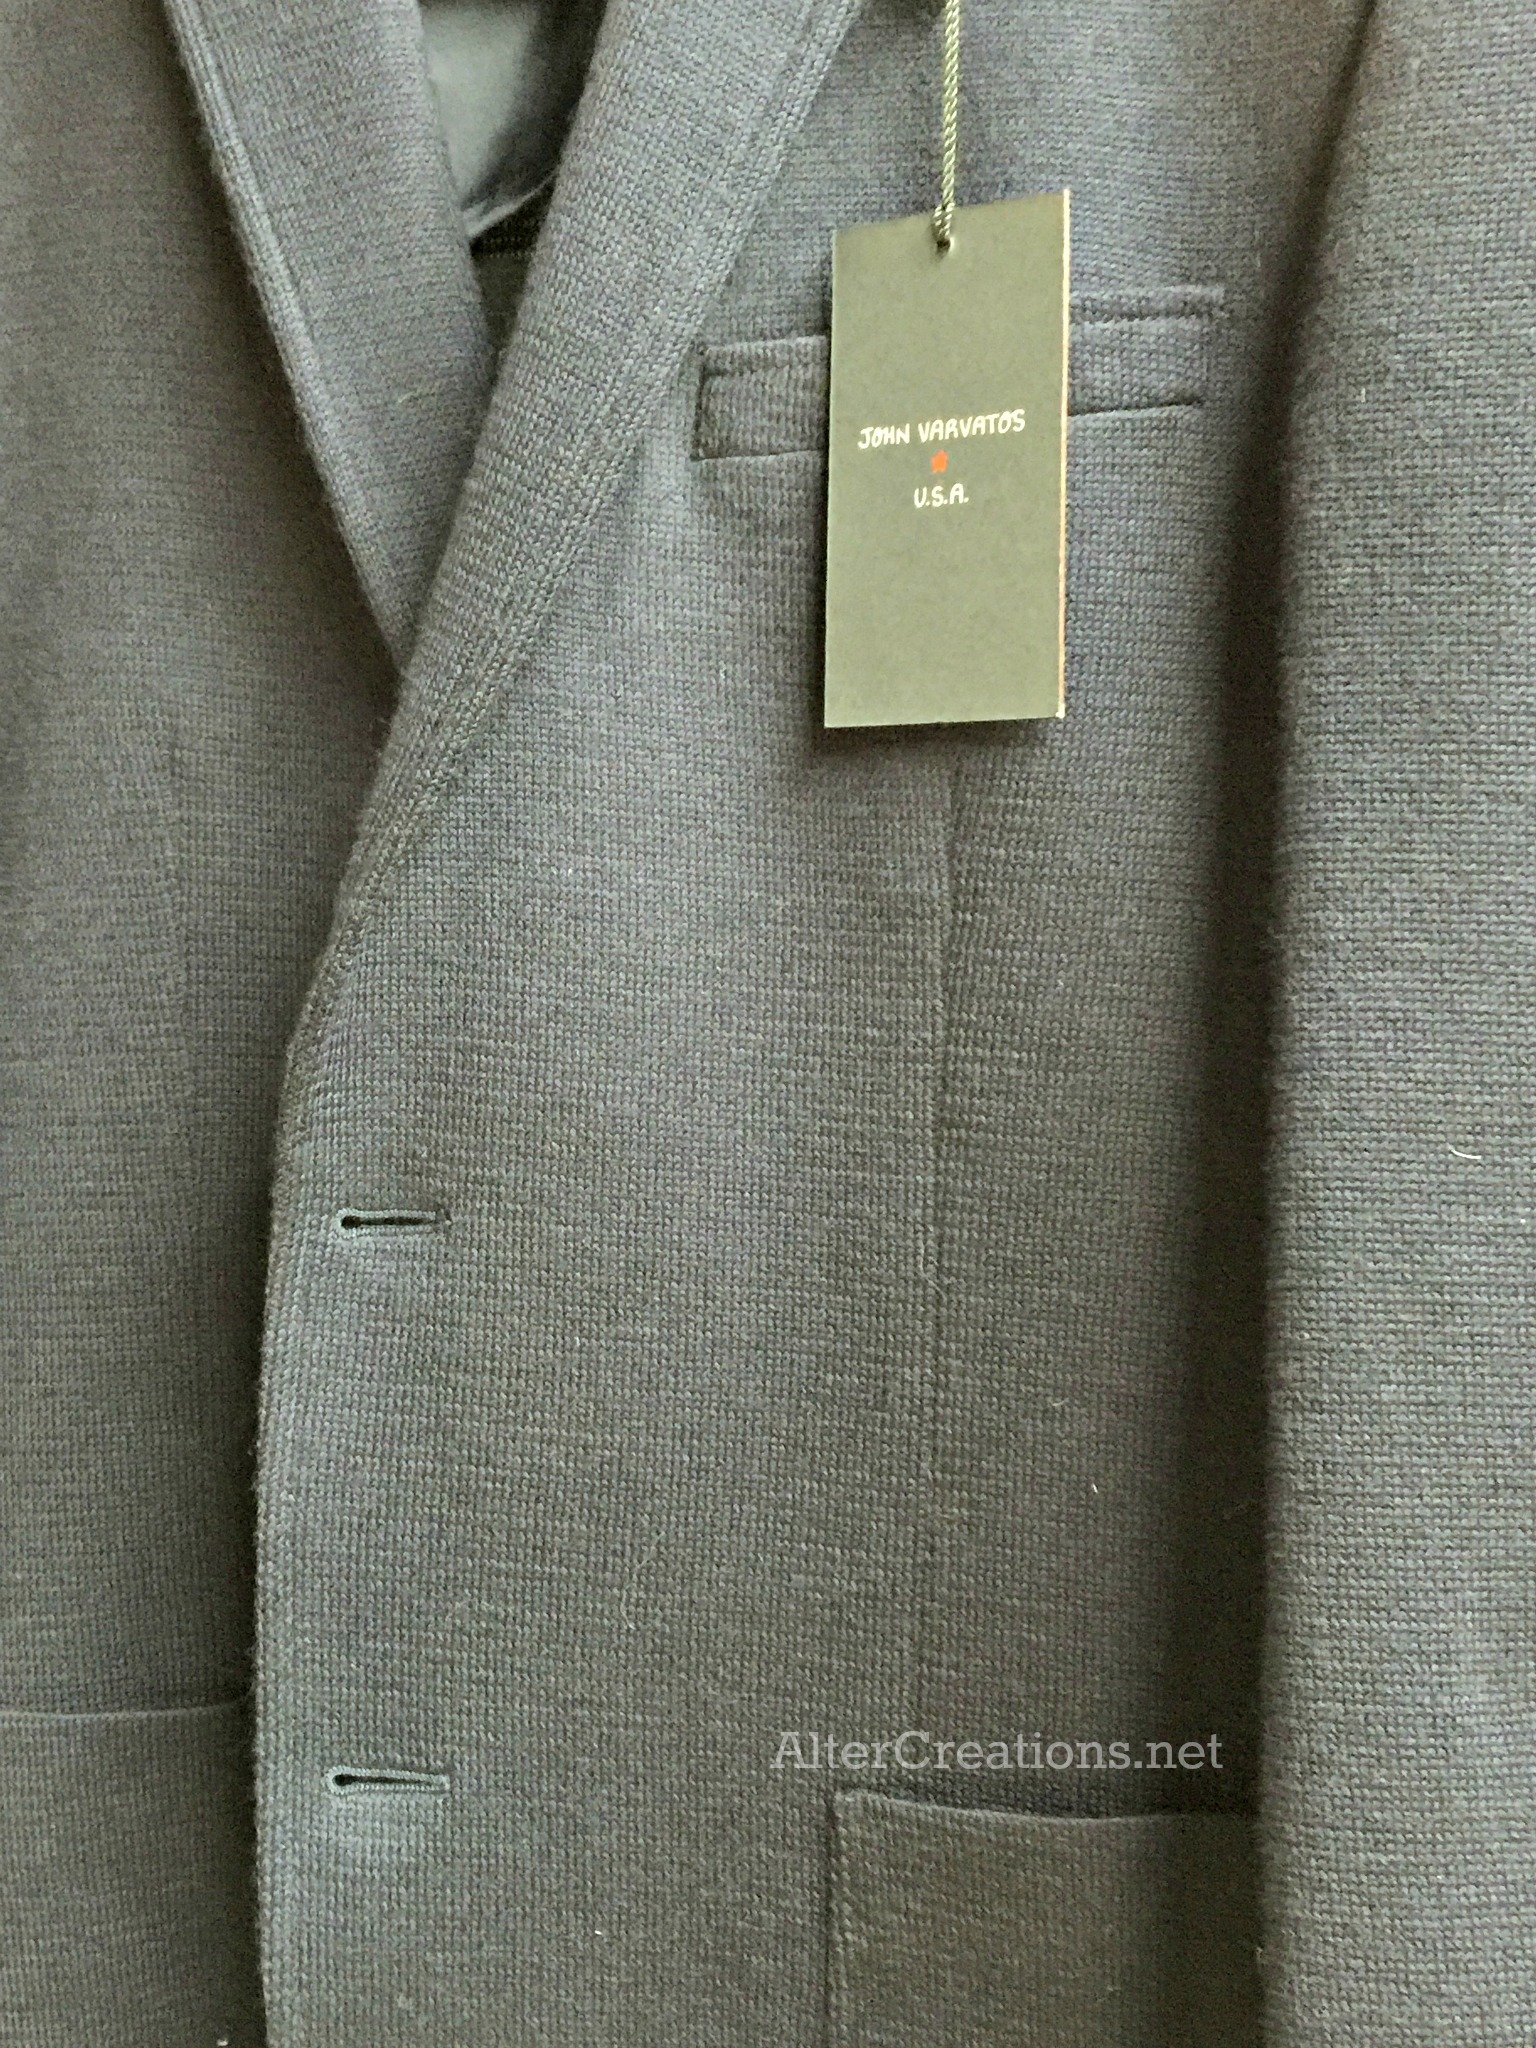 Gray suit